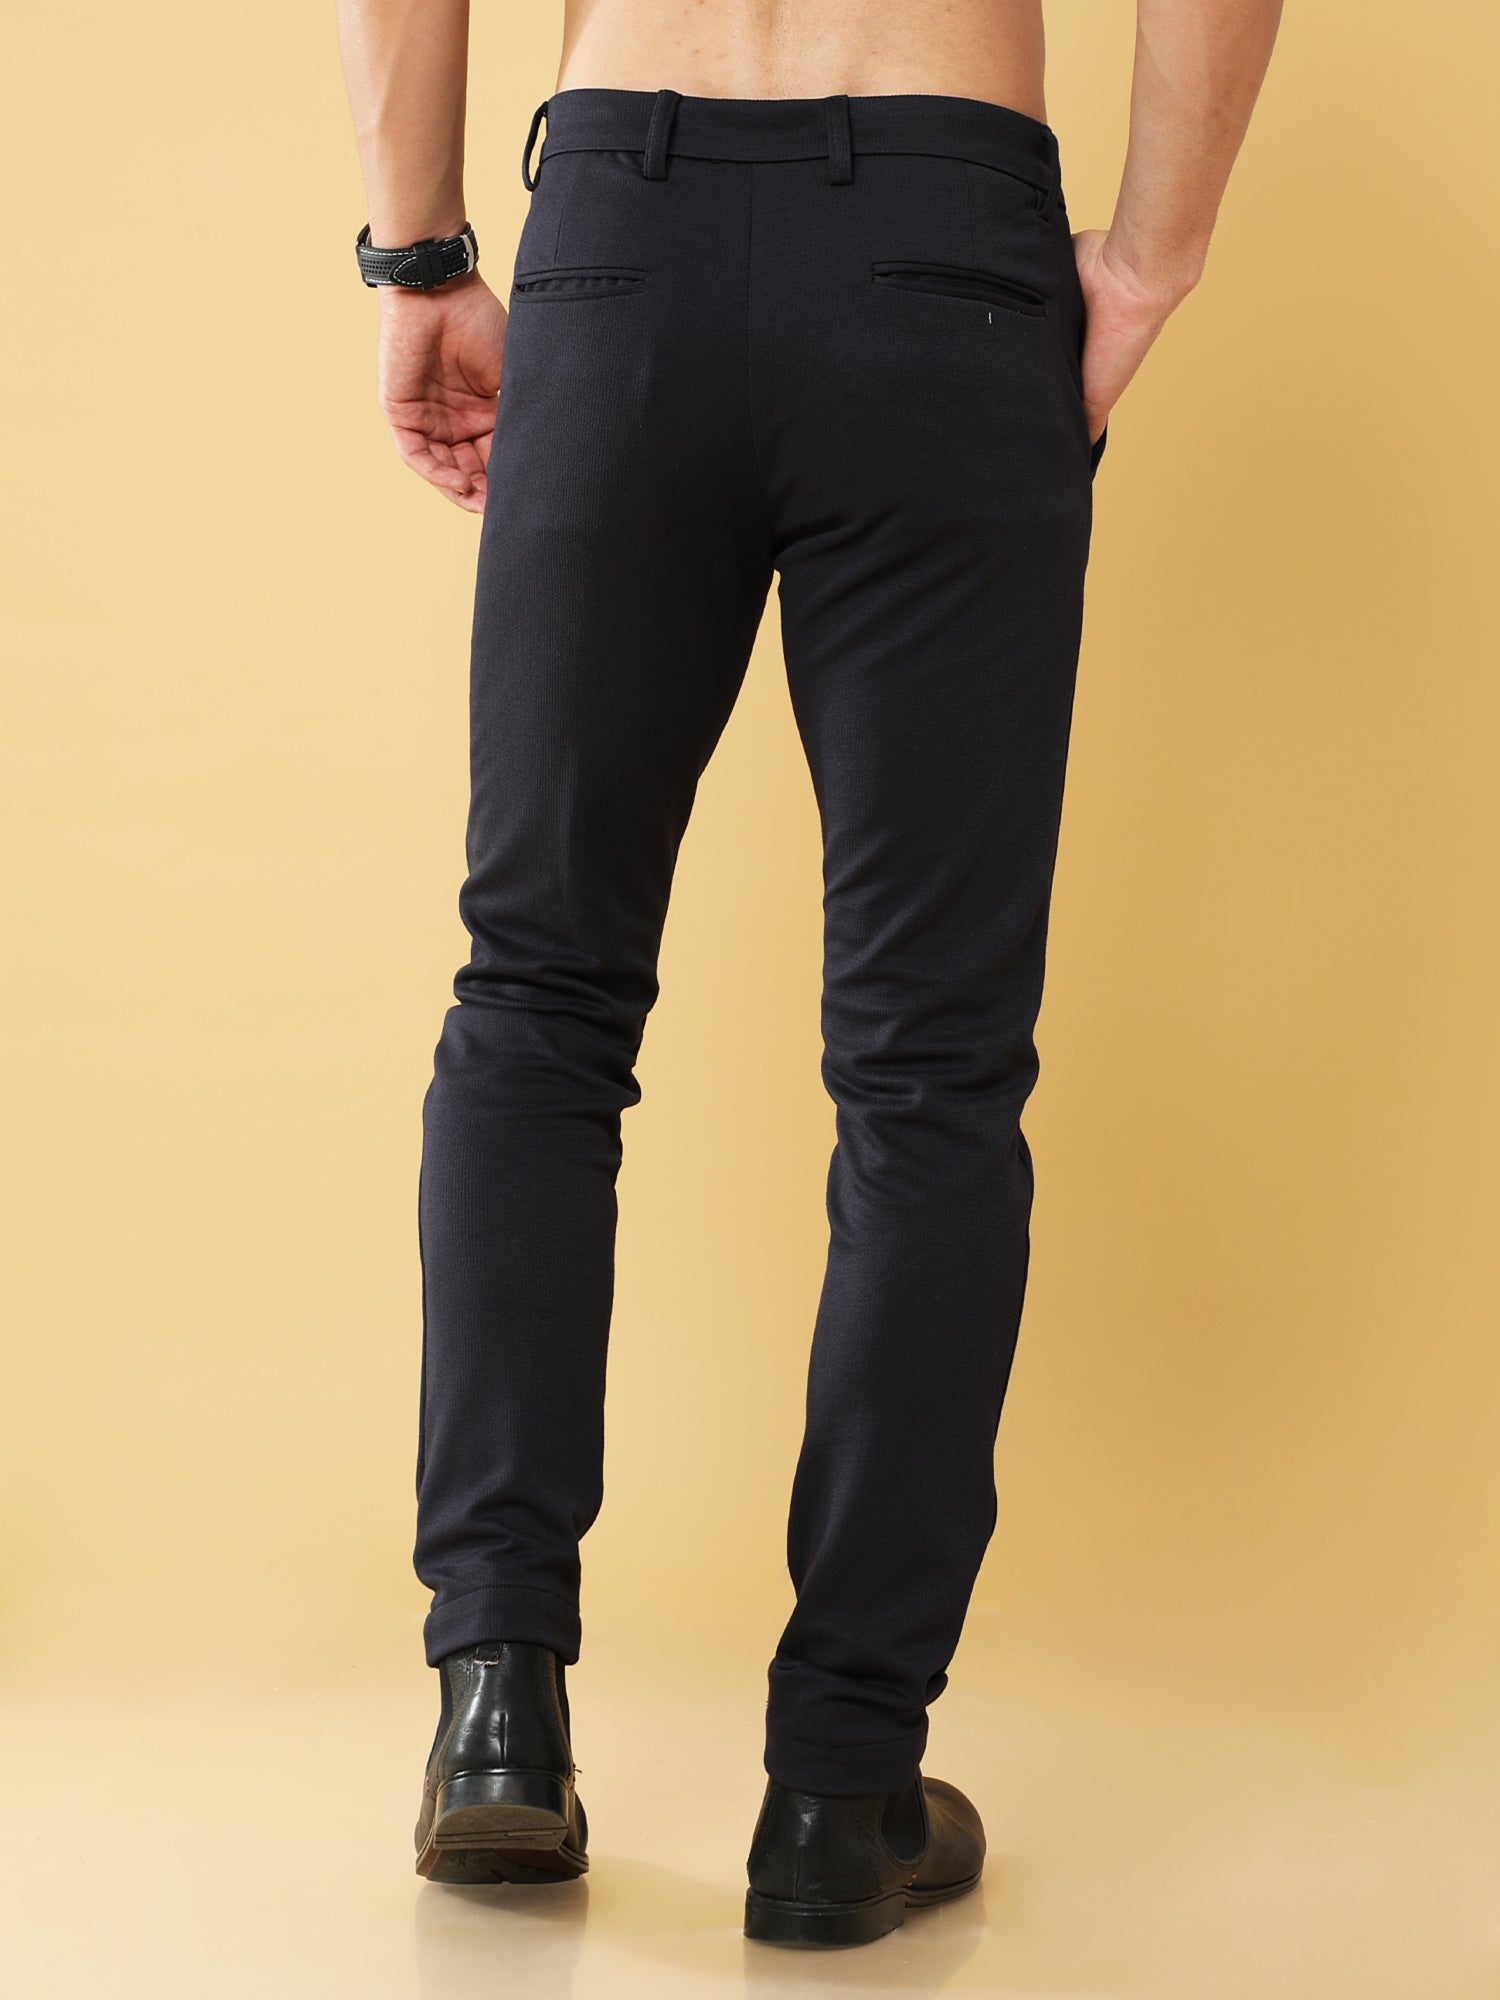 Jacquard Power Stretch Black Trouser